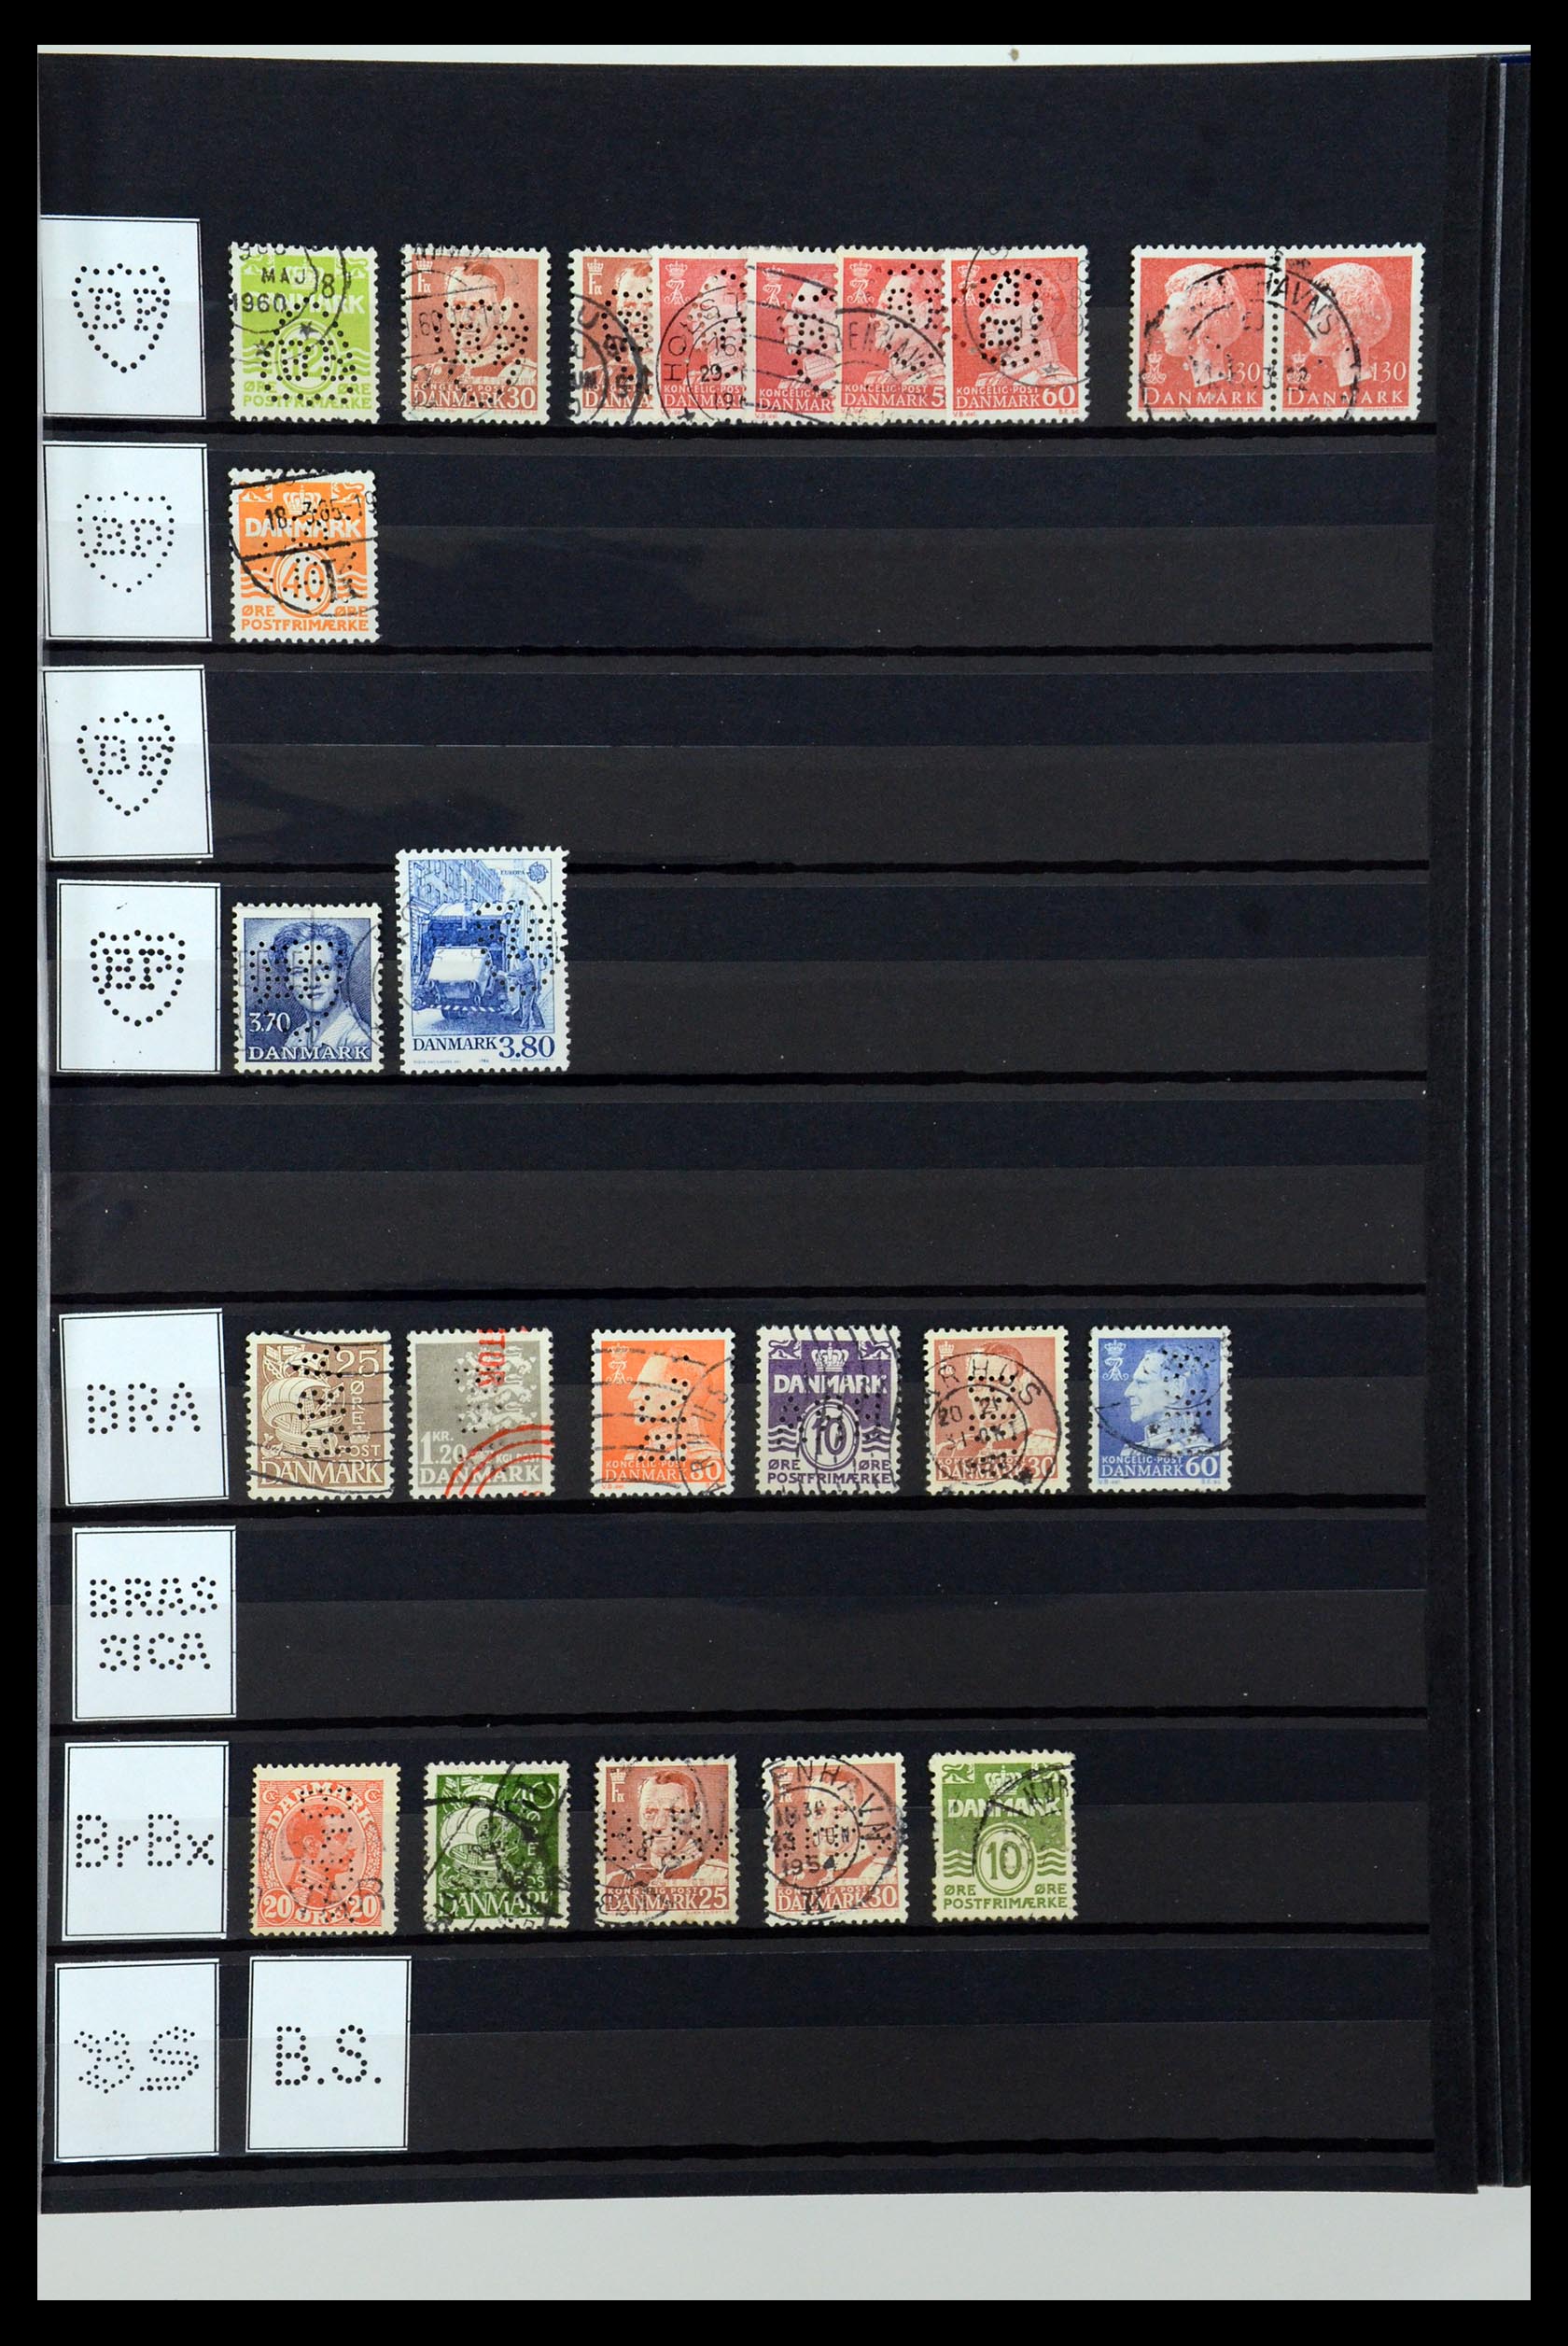 36396 019 - Stamp collection 36396 Denmark perfins.